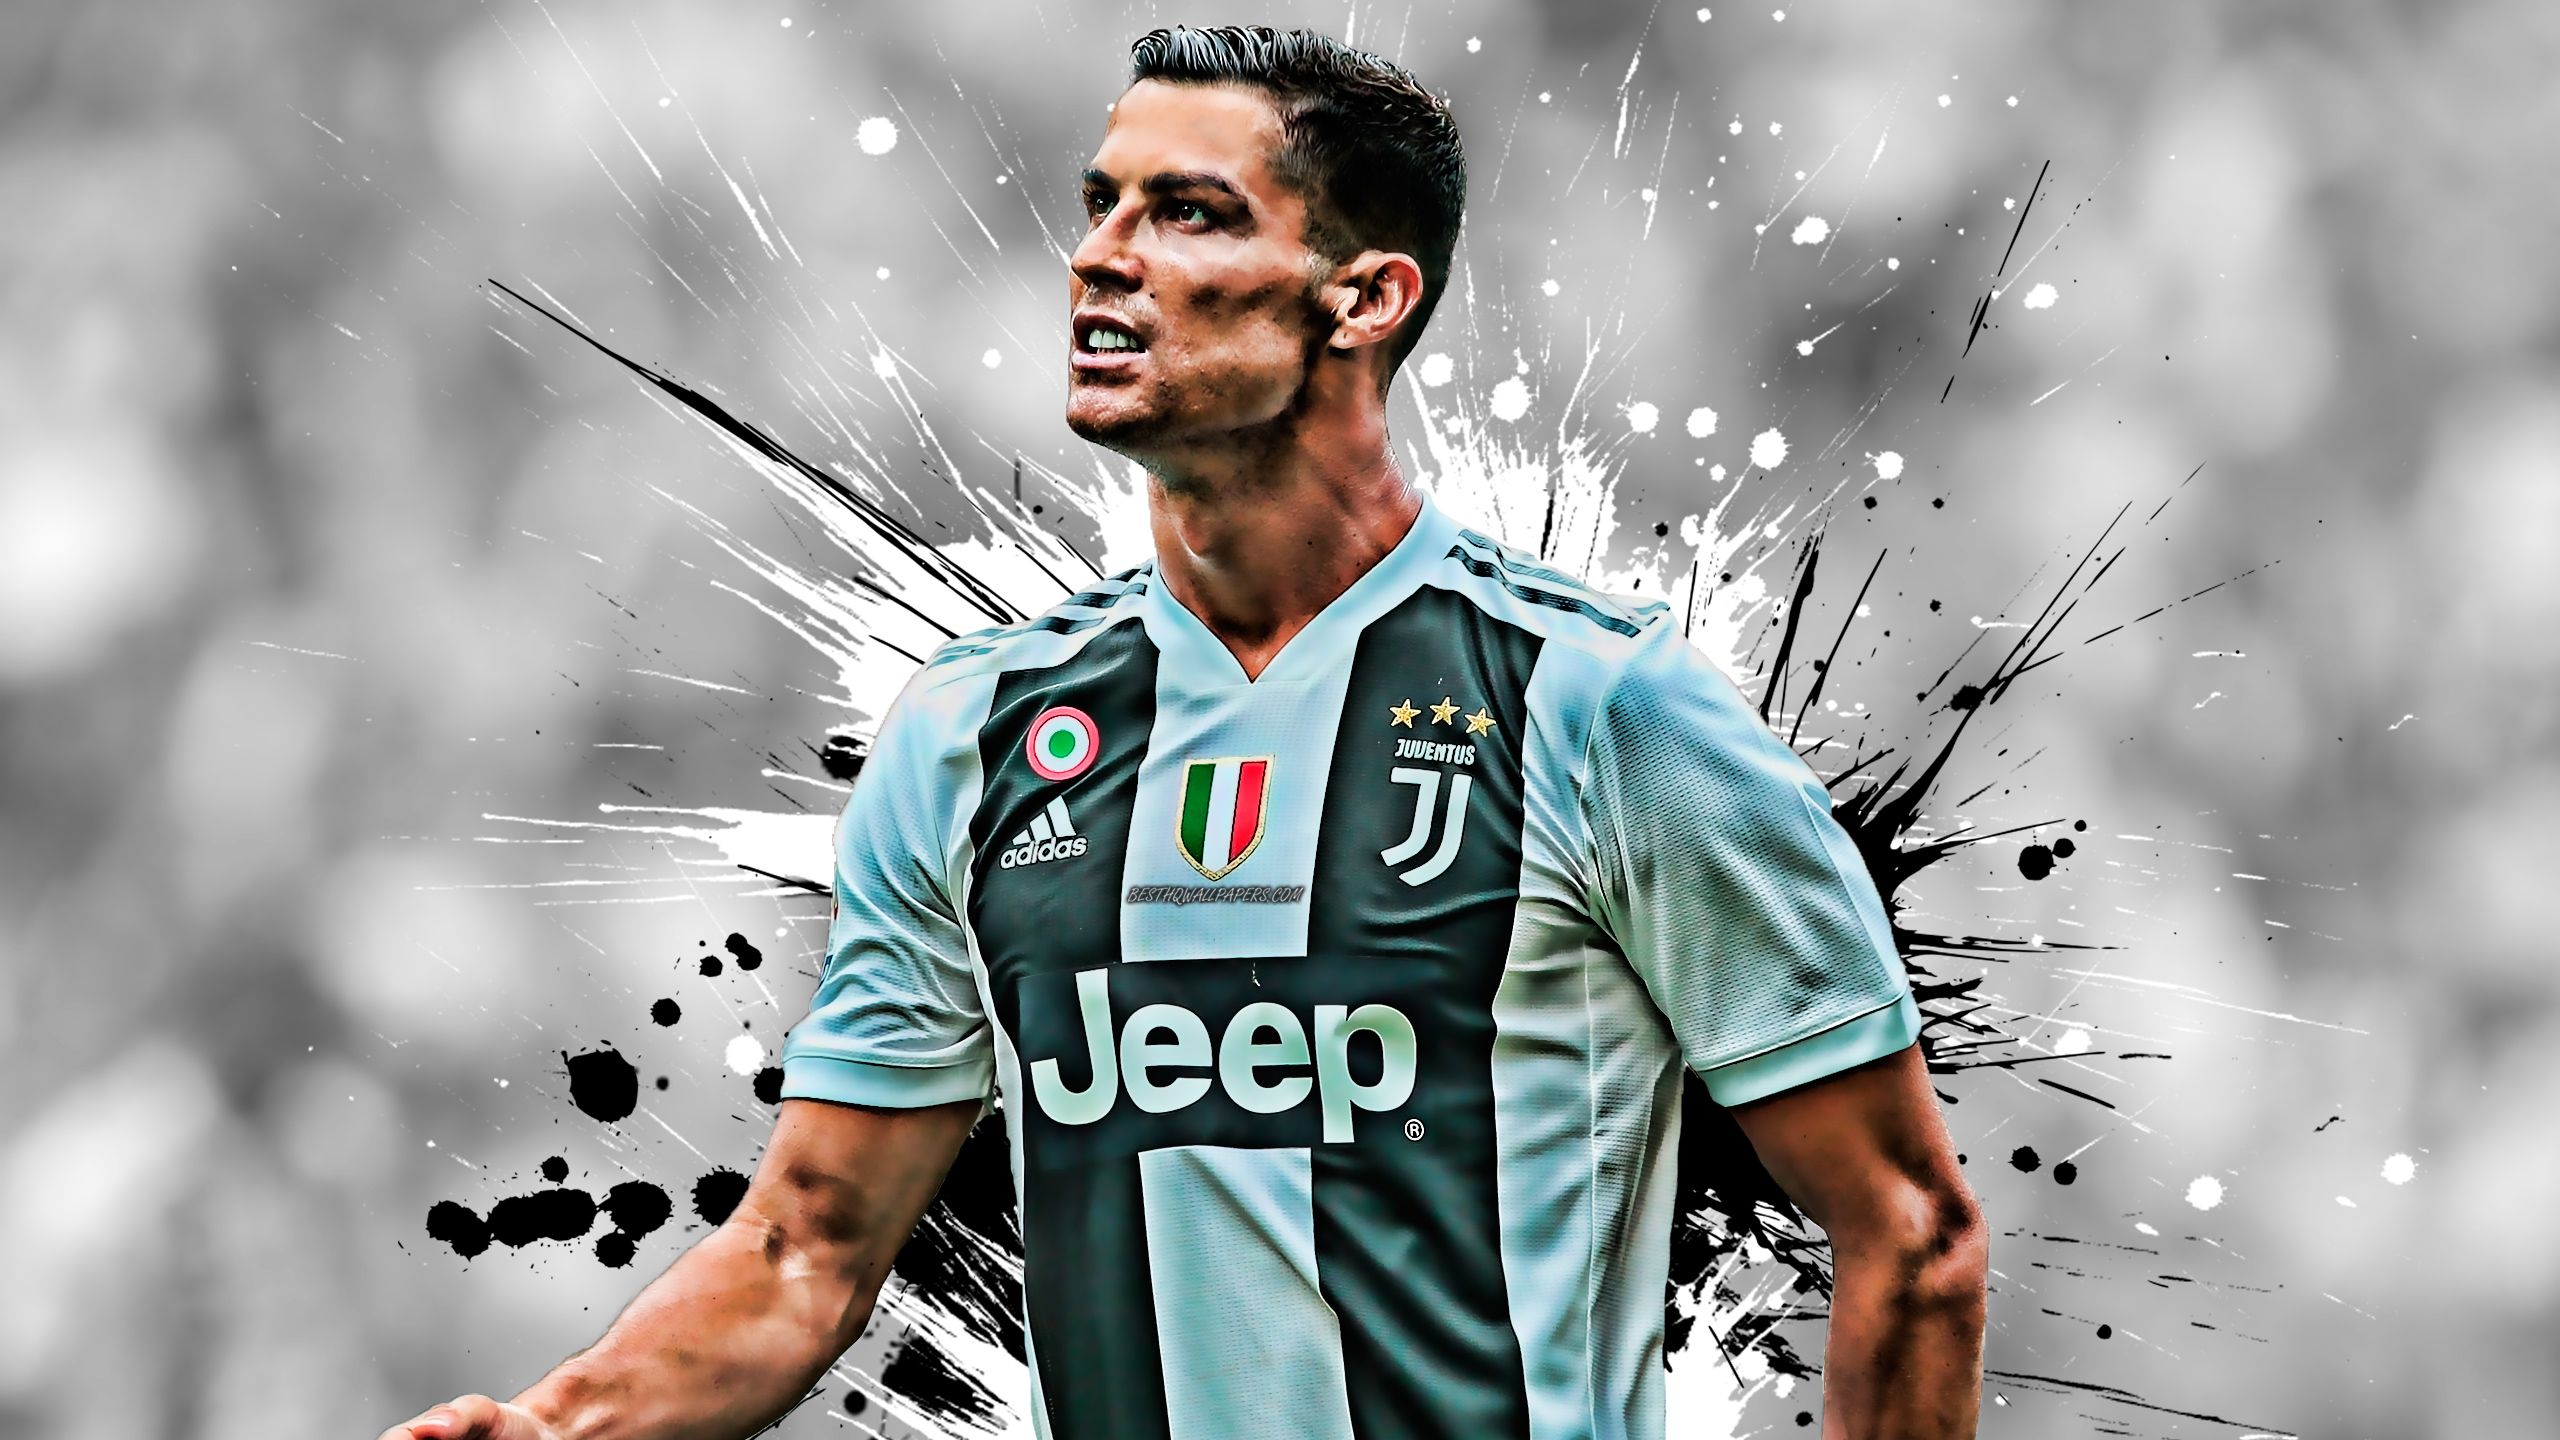 Cristiano Ronaldo Fondos de pantalla | HD Wallpapers | ID # 27455